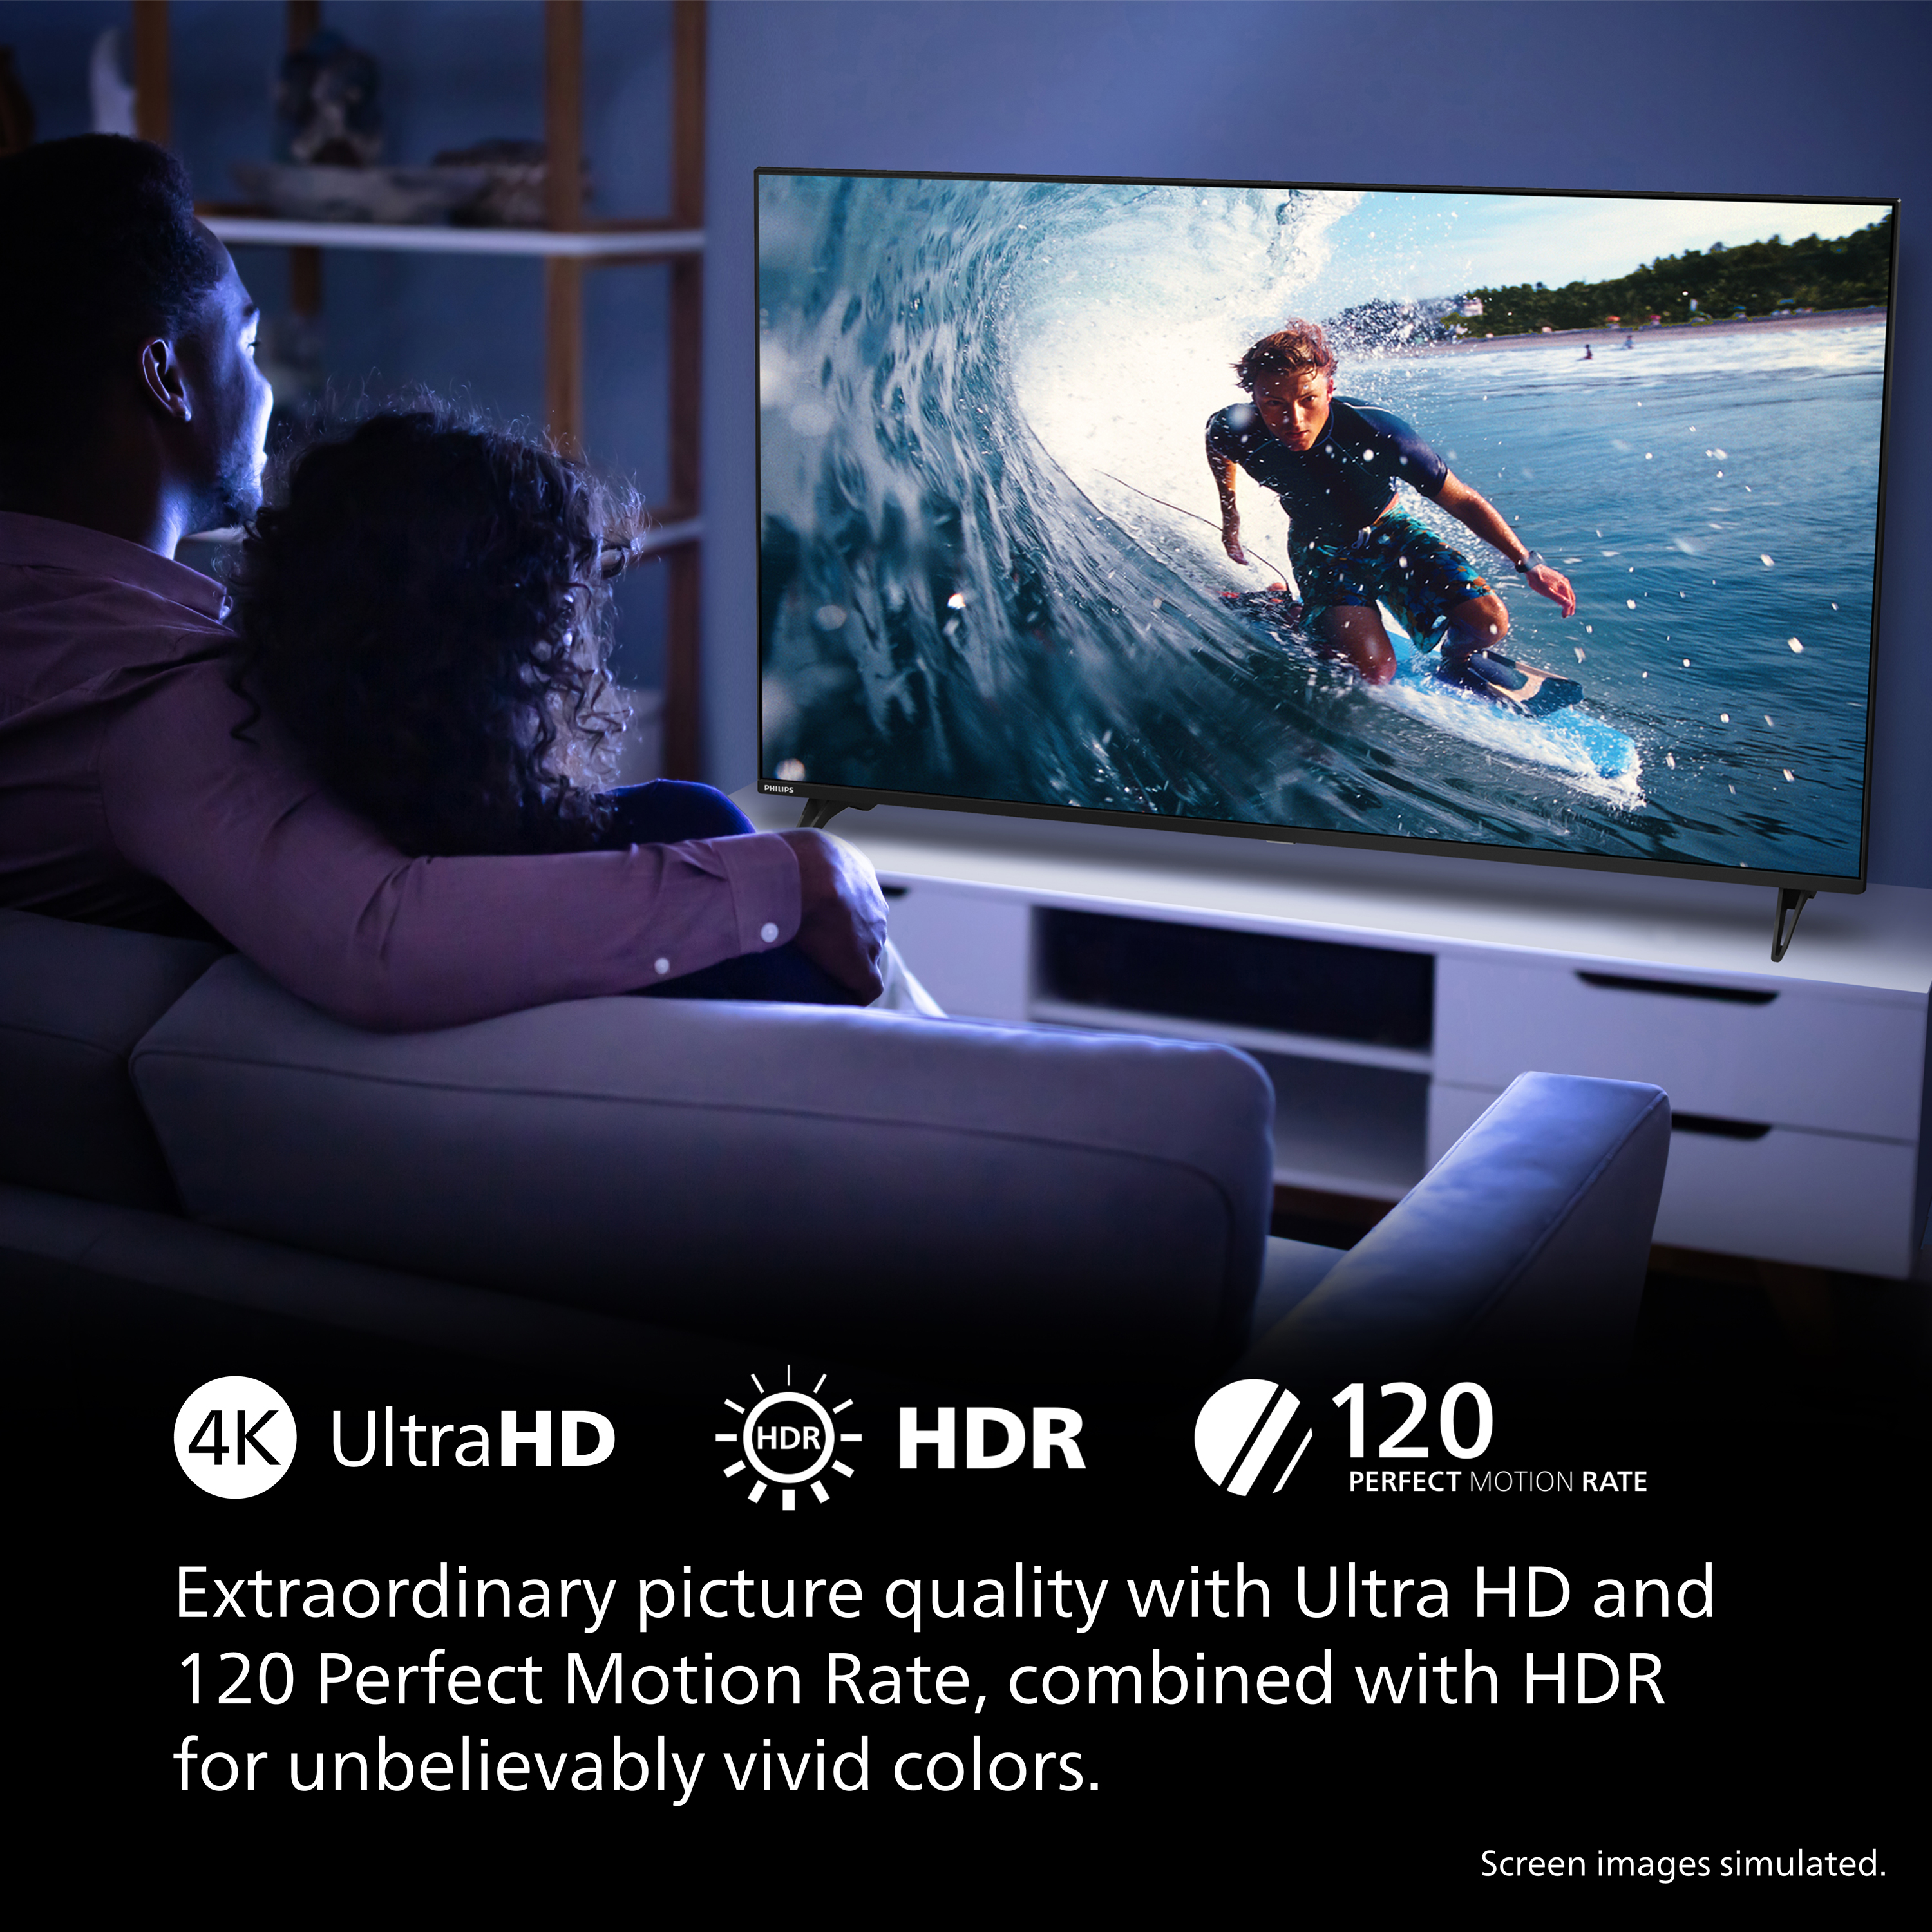 Philips 75" Class 4K Ultra HD (2160p) Google Smart LED TV (75PUL7552/F7) (New) - image 8 of 25